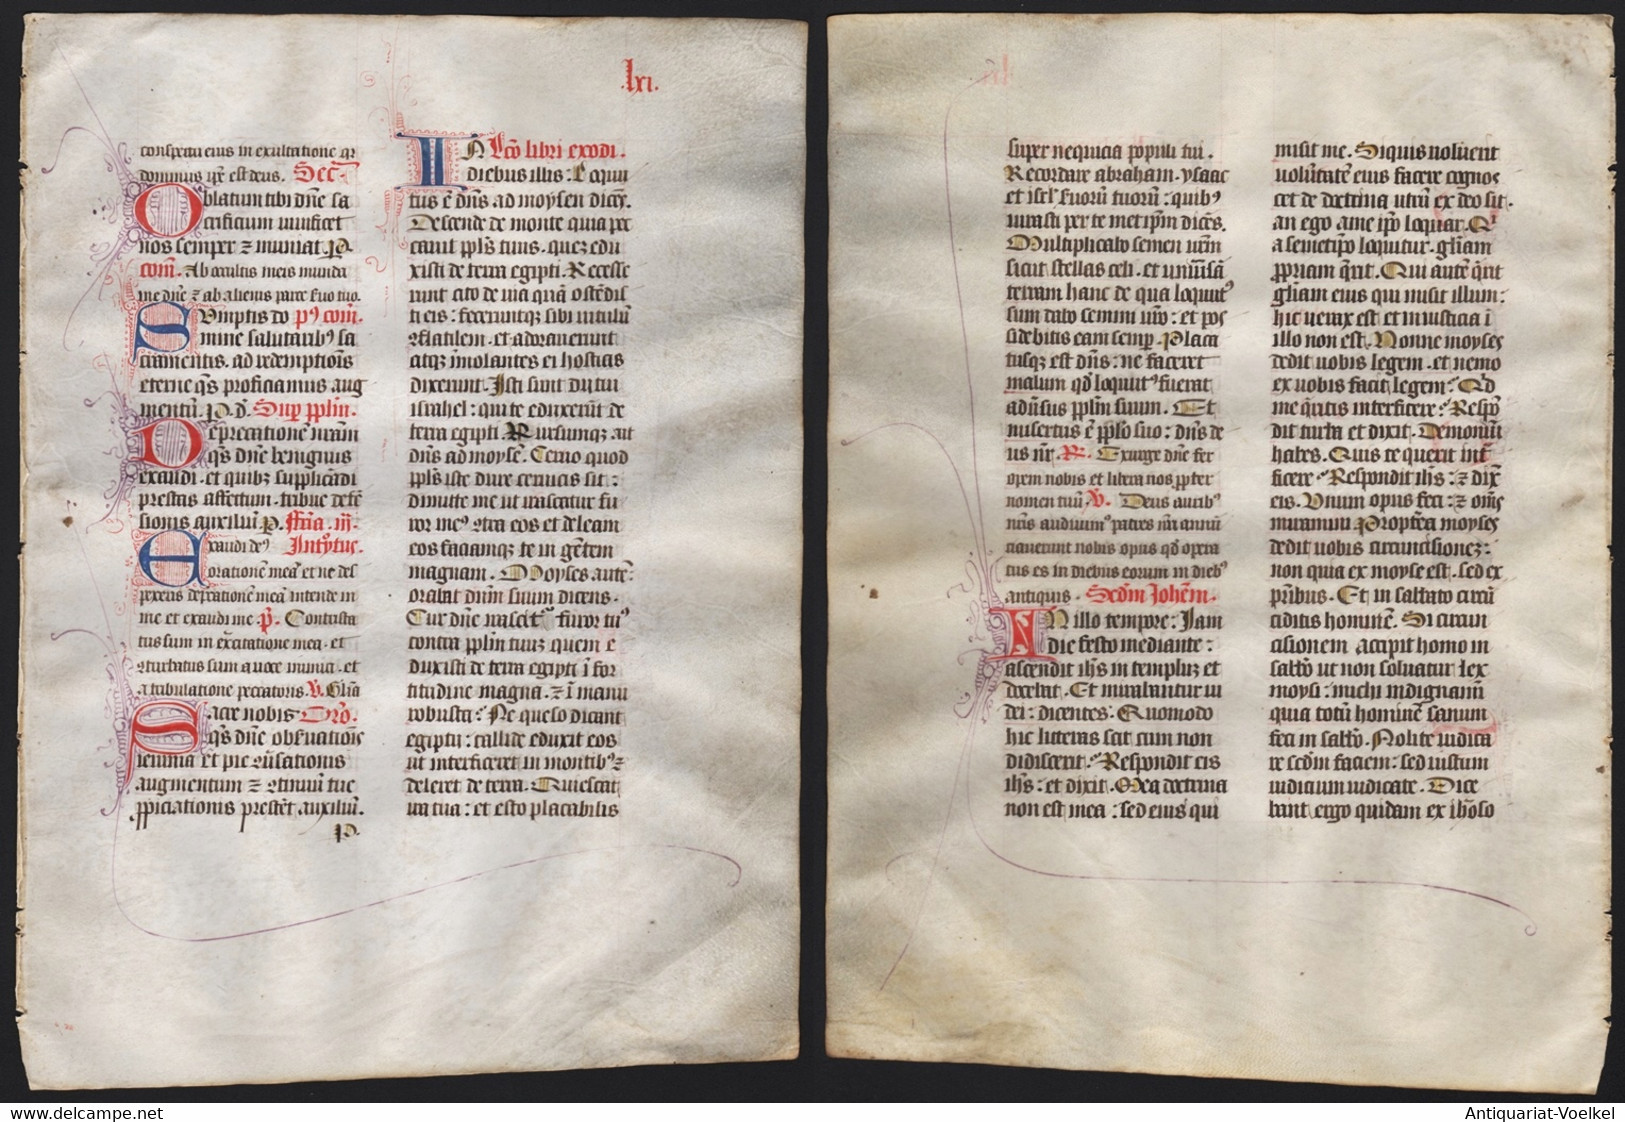 Missal Missale Manuscript Manuscrit Handschrift - (Blatt / Leaf LXI) - Theater & Scripts